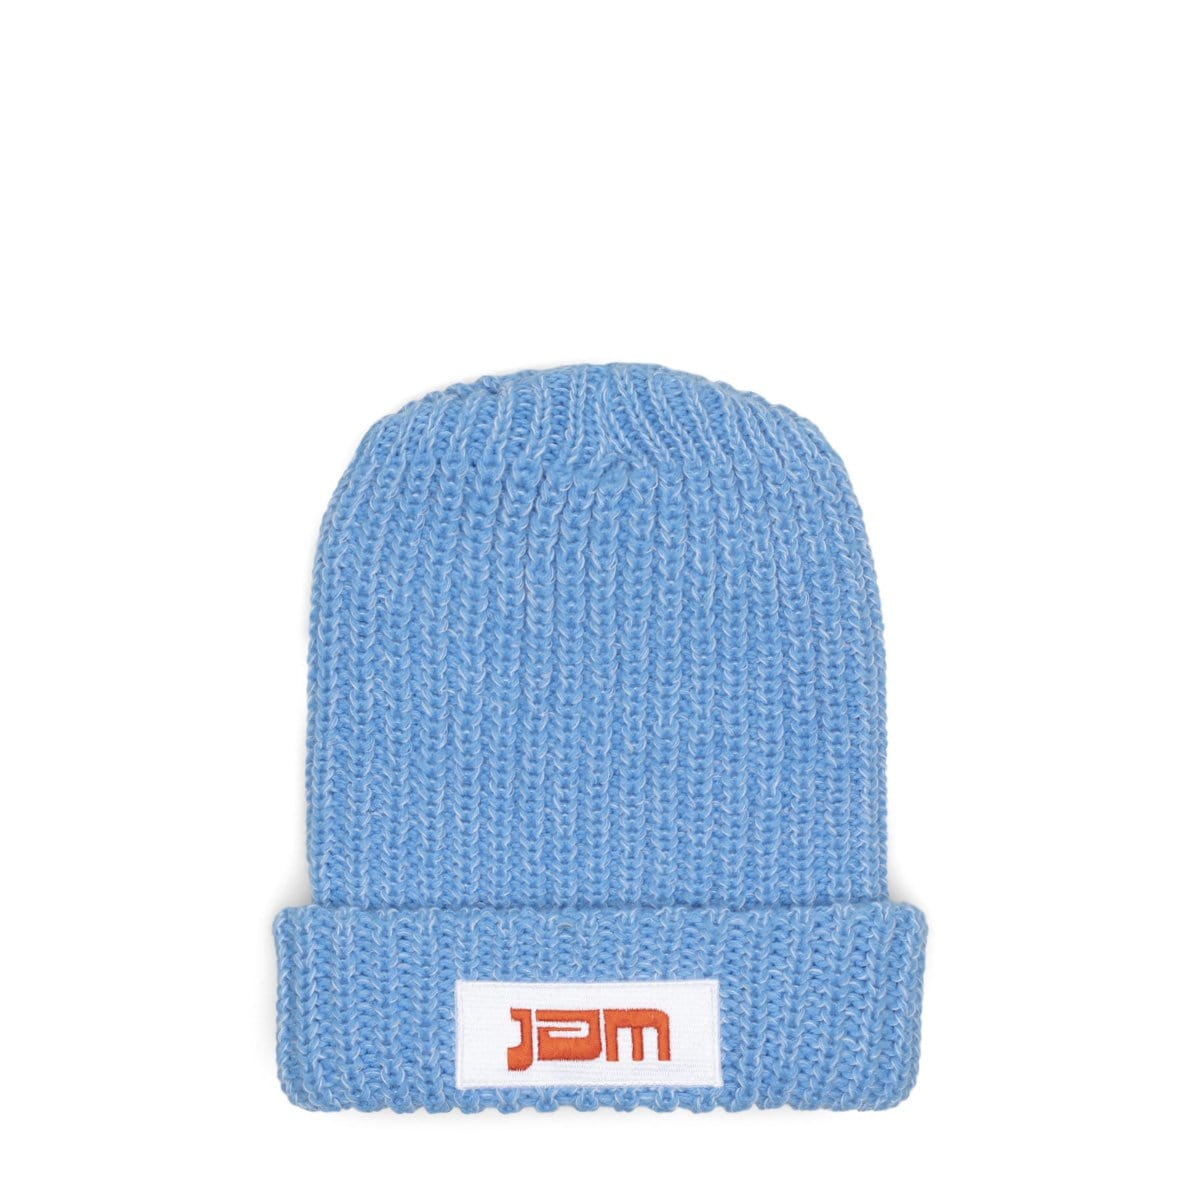 Jam Headwear POWDER BLUE / O/S LOOSE GAUGE BEANIE